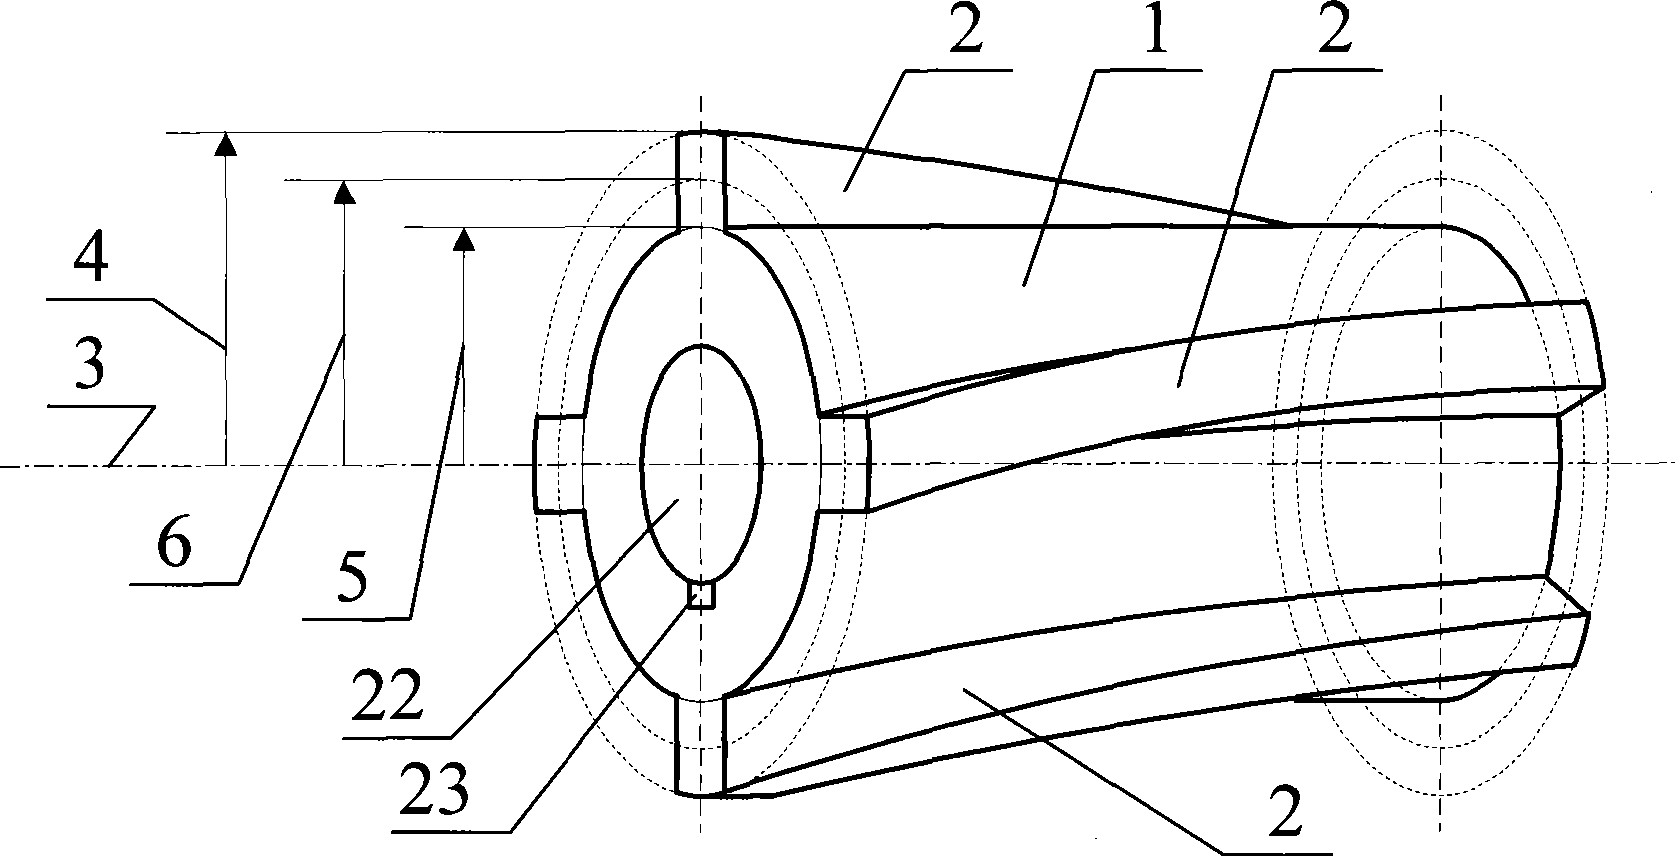 Self-wind cooled rotor magneto resistance genus motor